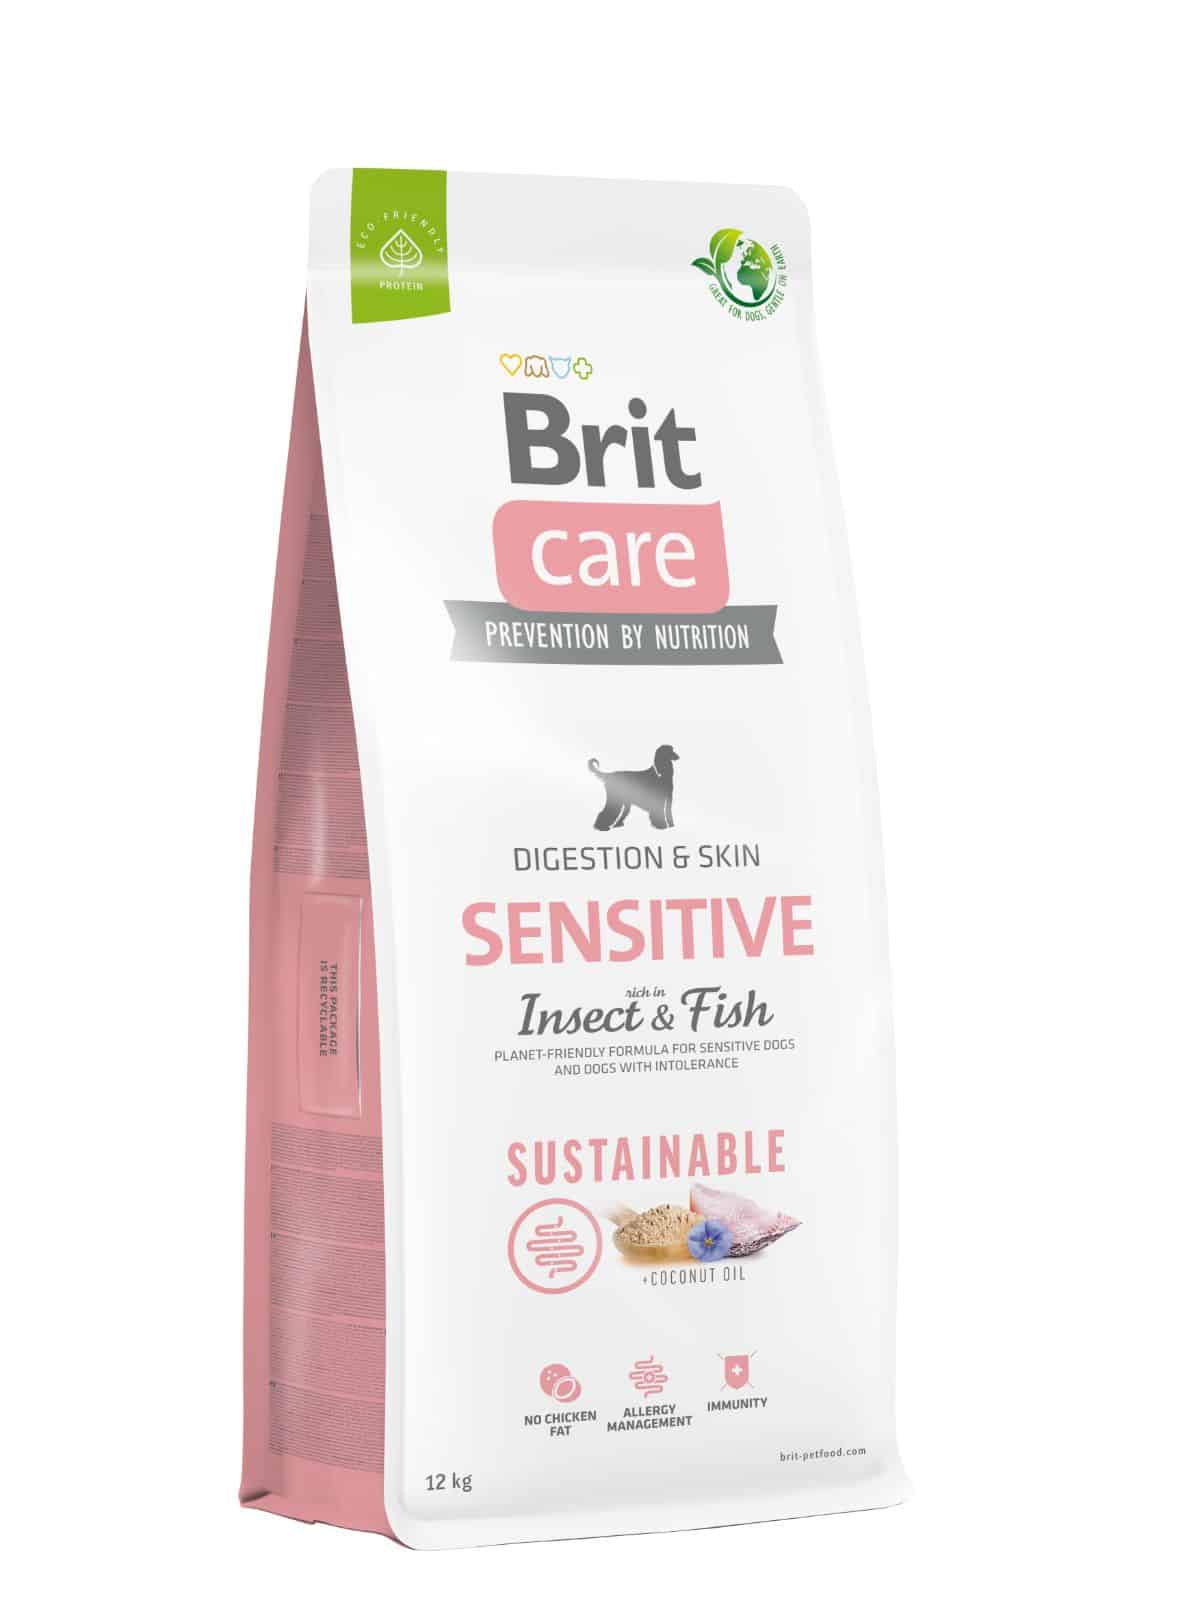 Brit Care – Sustainable – Sensitive-2